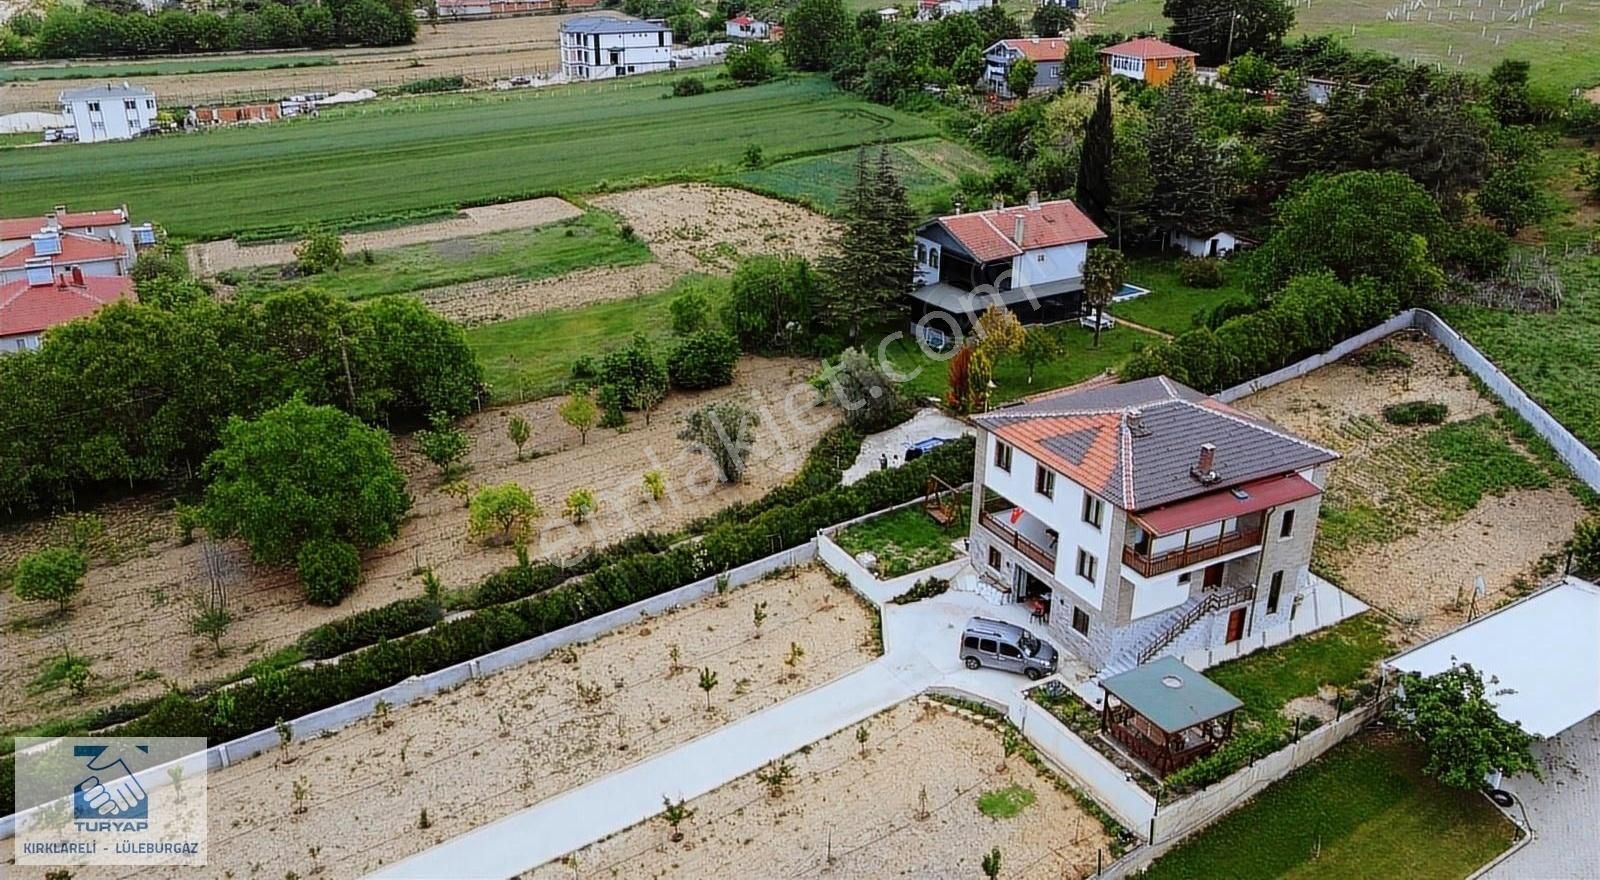 Pınarhisar Ataköy Köyü Satılık Villa TURYAP'TAN P.HİSAR ATAKÖY'DE 5118 m2 ARSA İÇİNDE SATILIK VİLLA